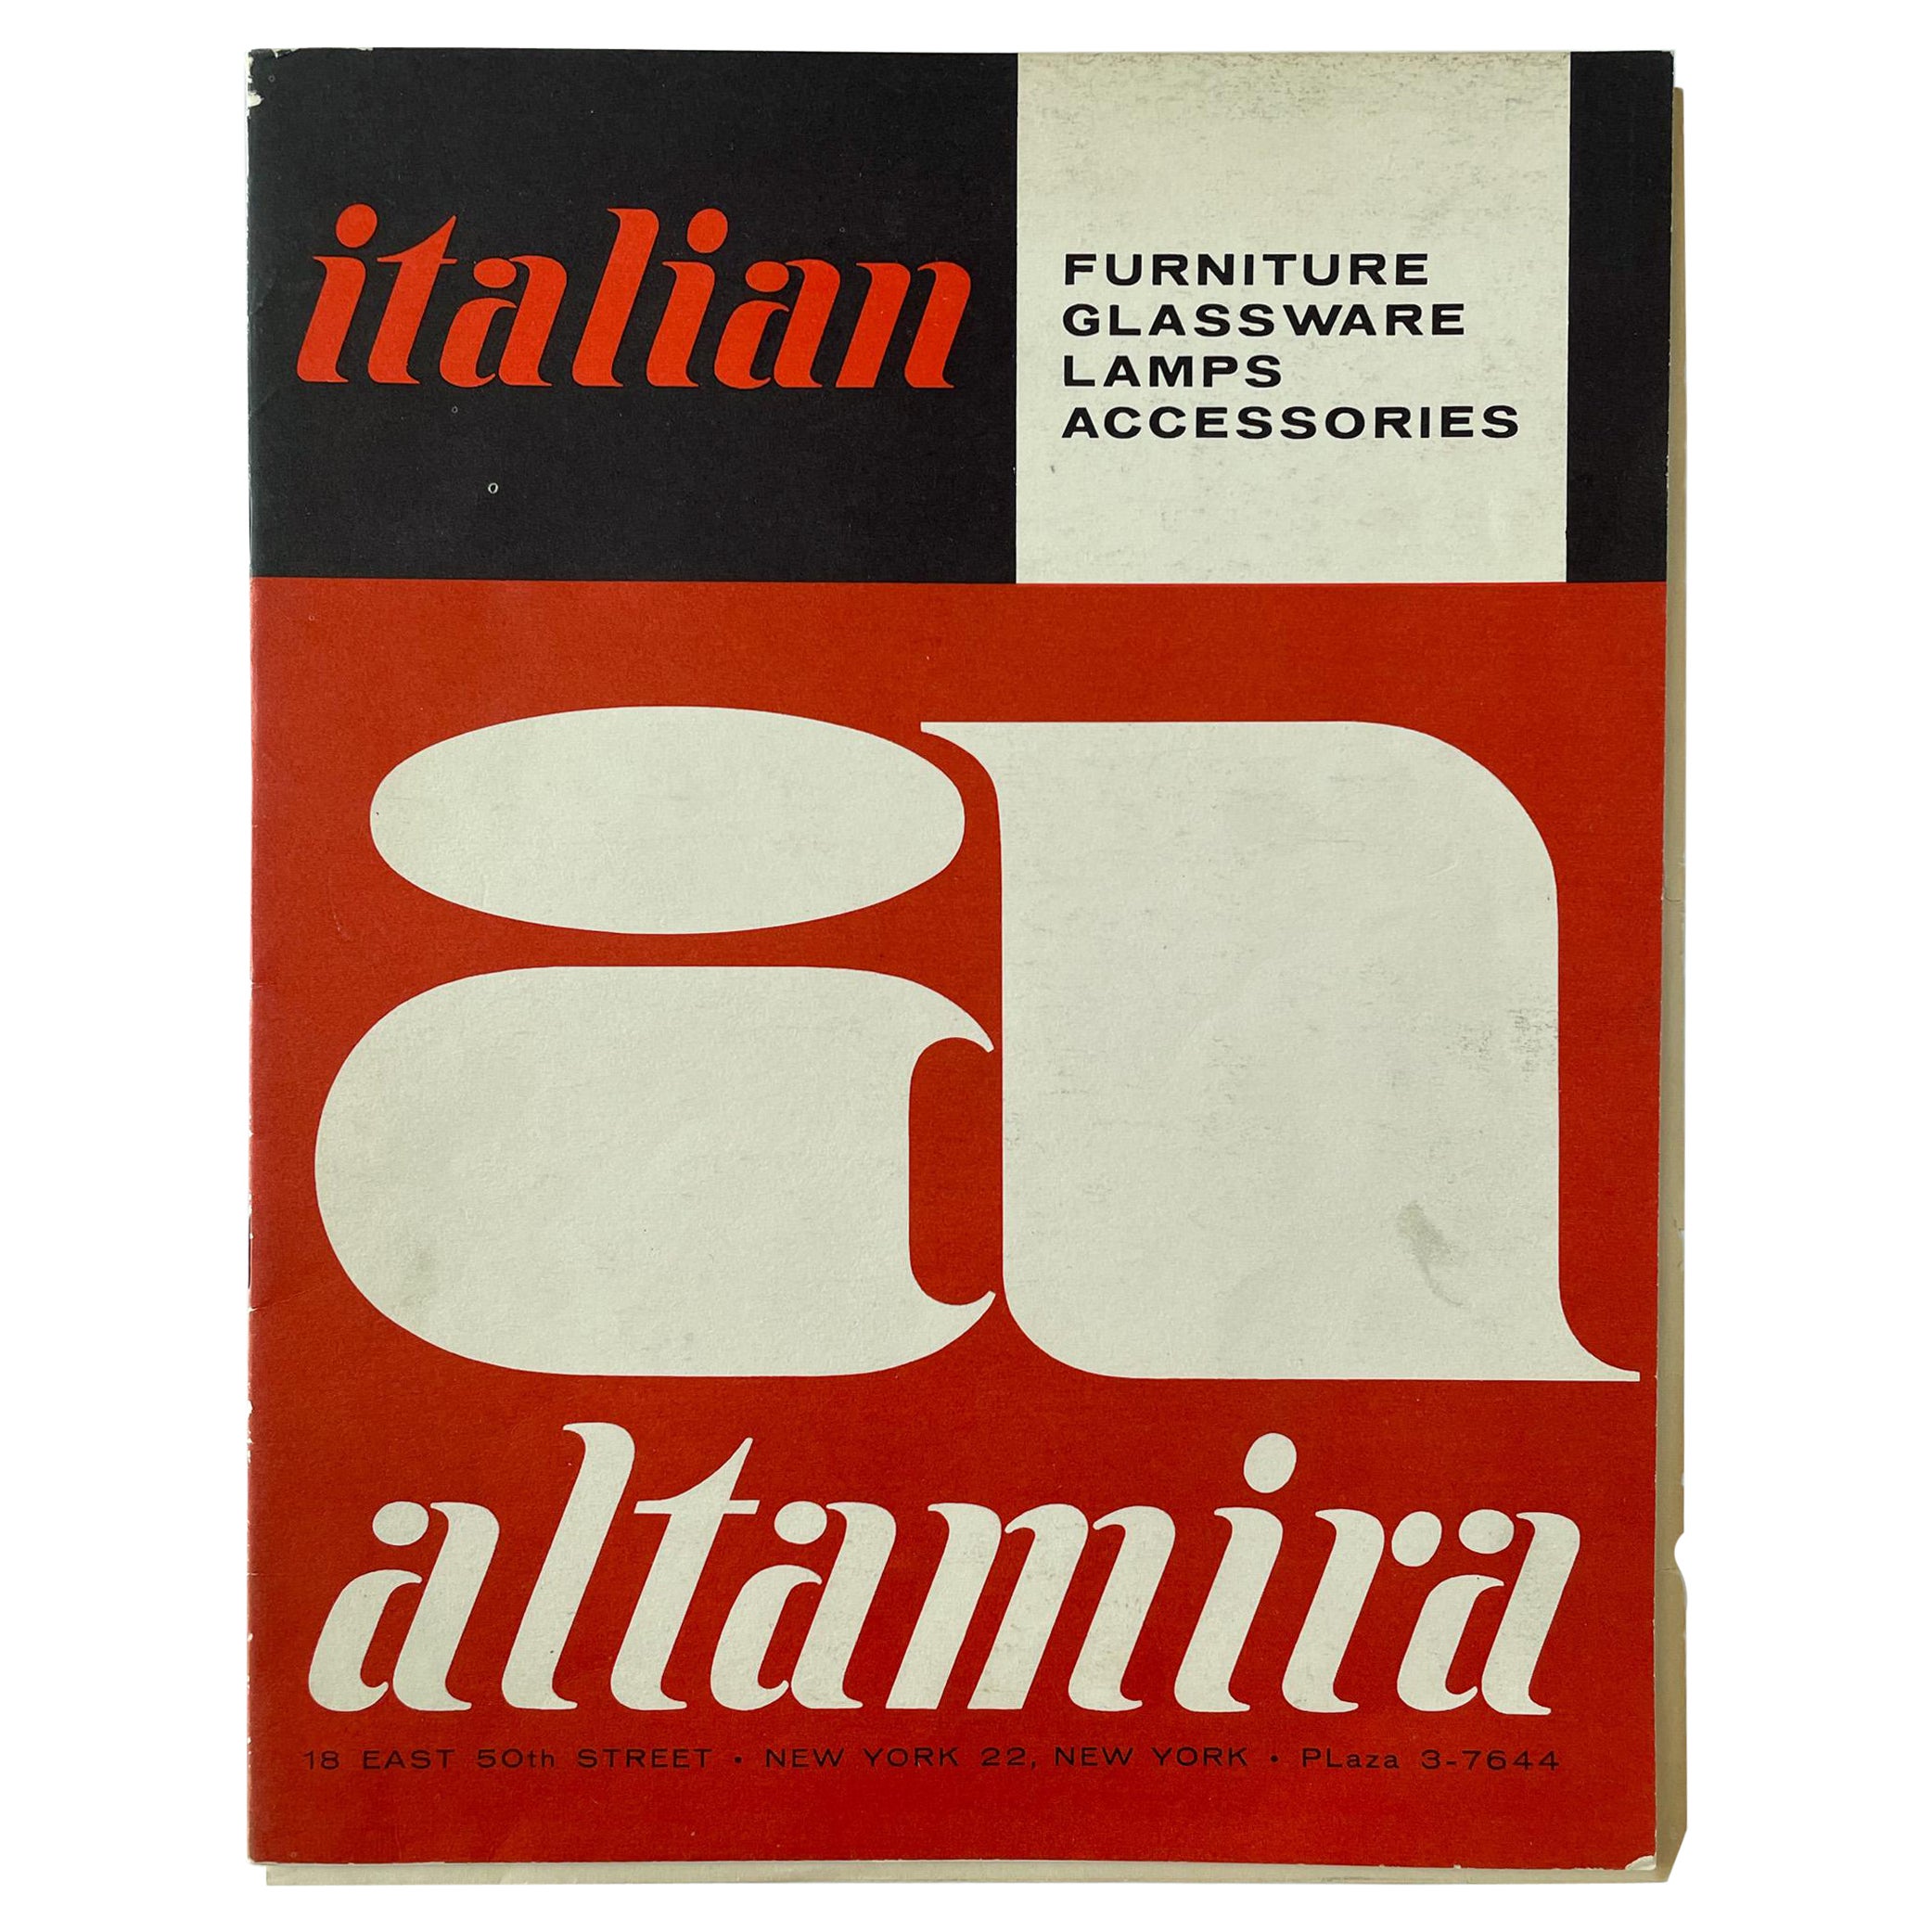 Altamira: Italian Furniture Glassware Lamps Accessories For Sale